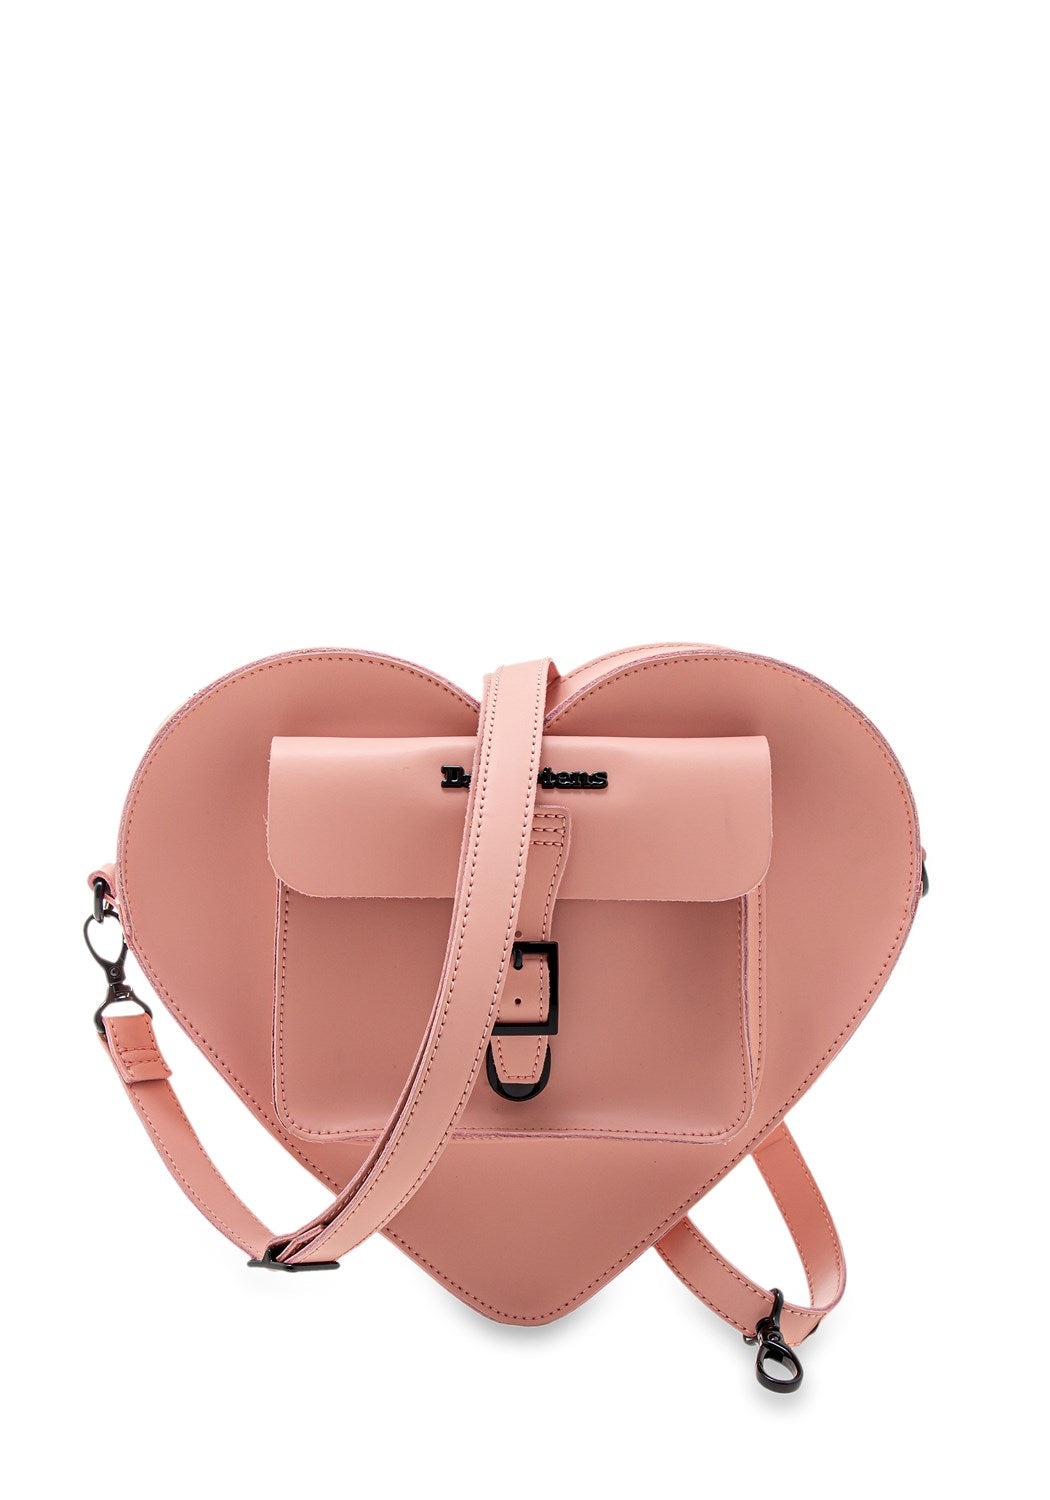 Heart Backpack peach | Bildmaterial bereitgestellt von SHOES.PLEASE.